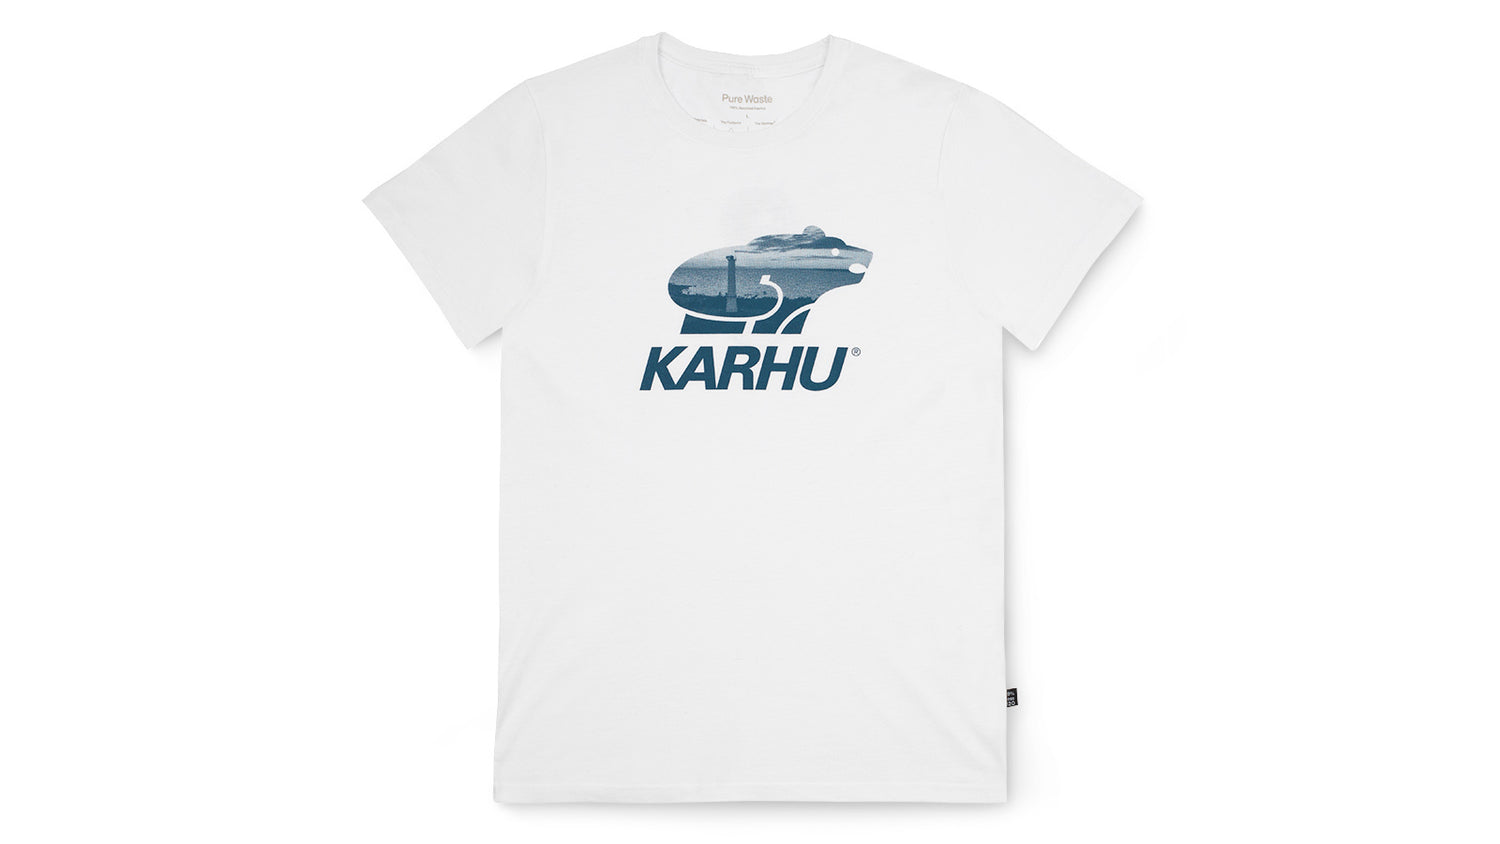 KARHU Baltic Sea T-shirt - Saving the Baltic Sea